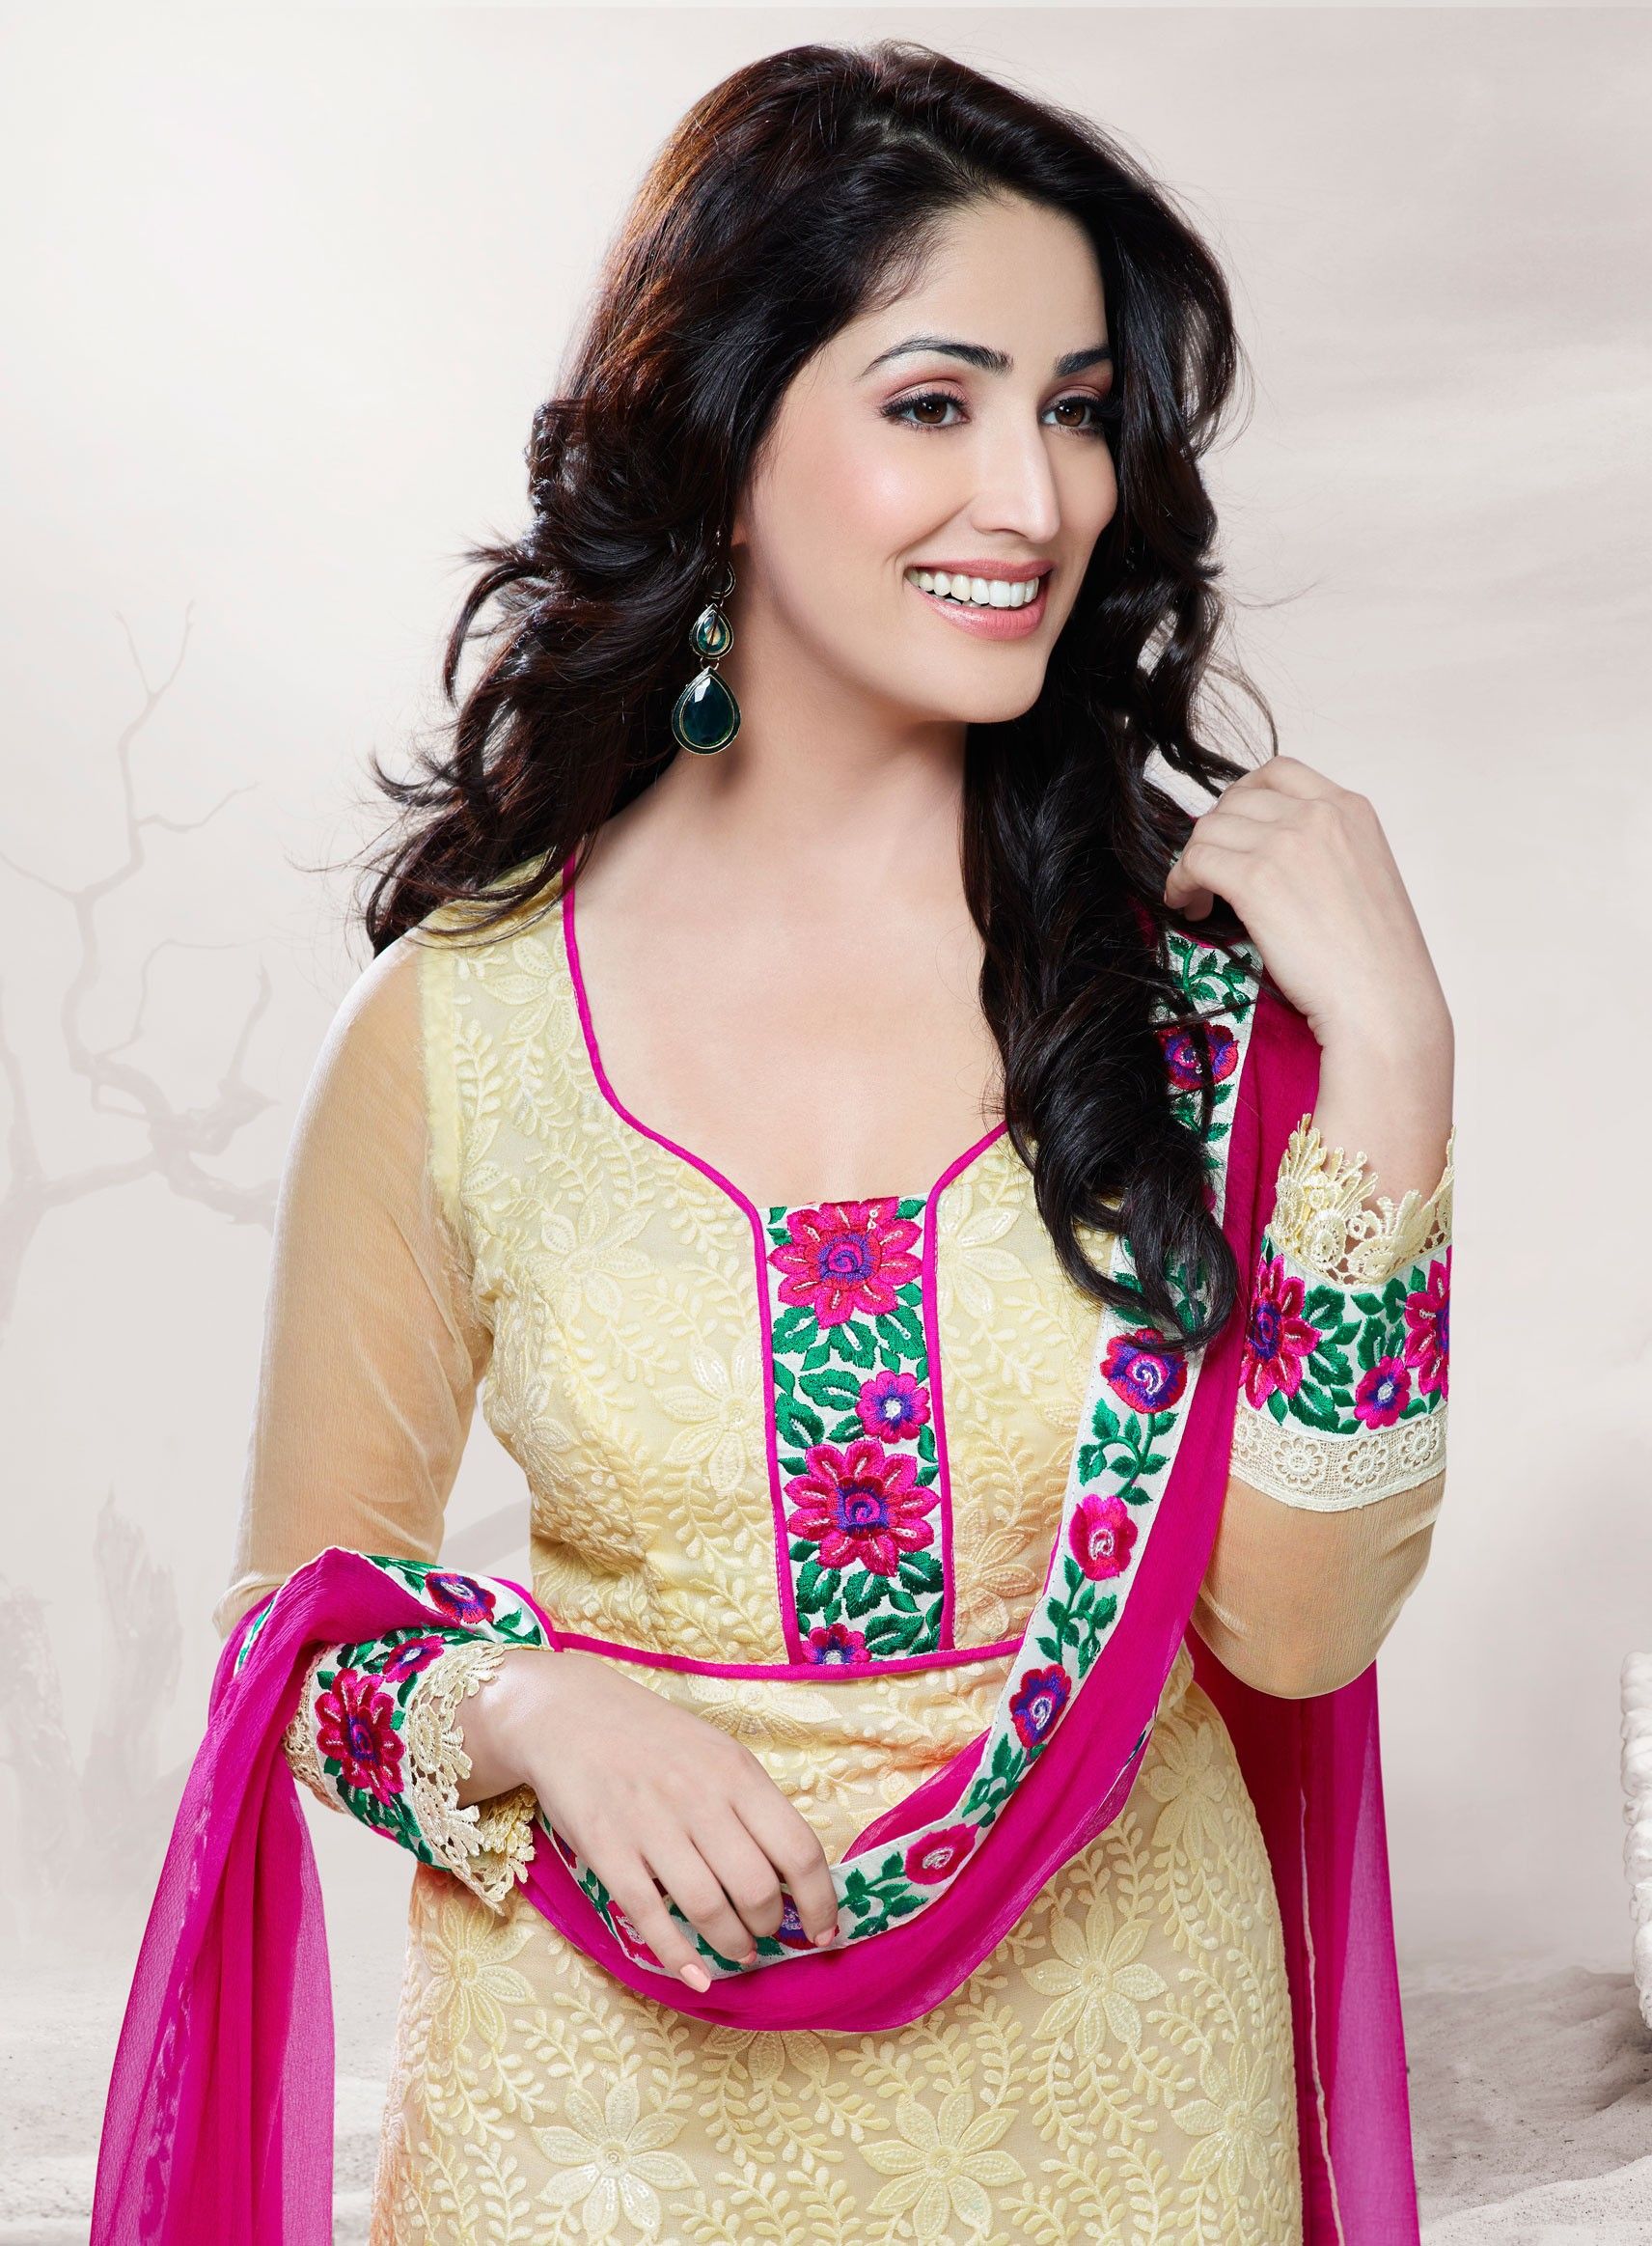 Tamanna Bhatia Hd Wallpapers  Girl Punjabi Suit Design Punjabi Celebrities  Pictures for Whatsapp Facebook  Punjabi Pictures